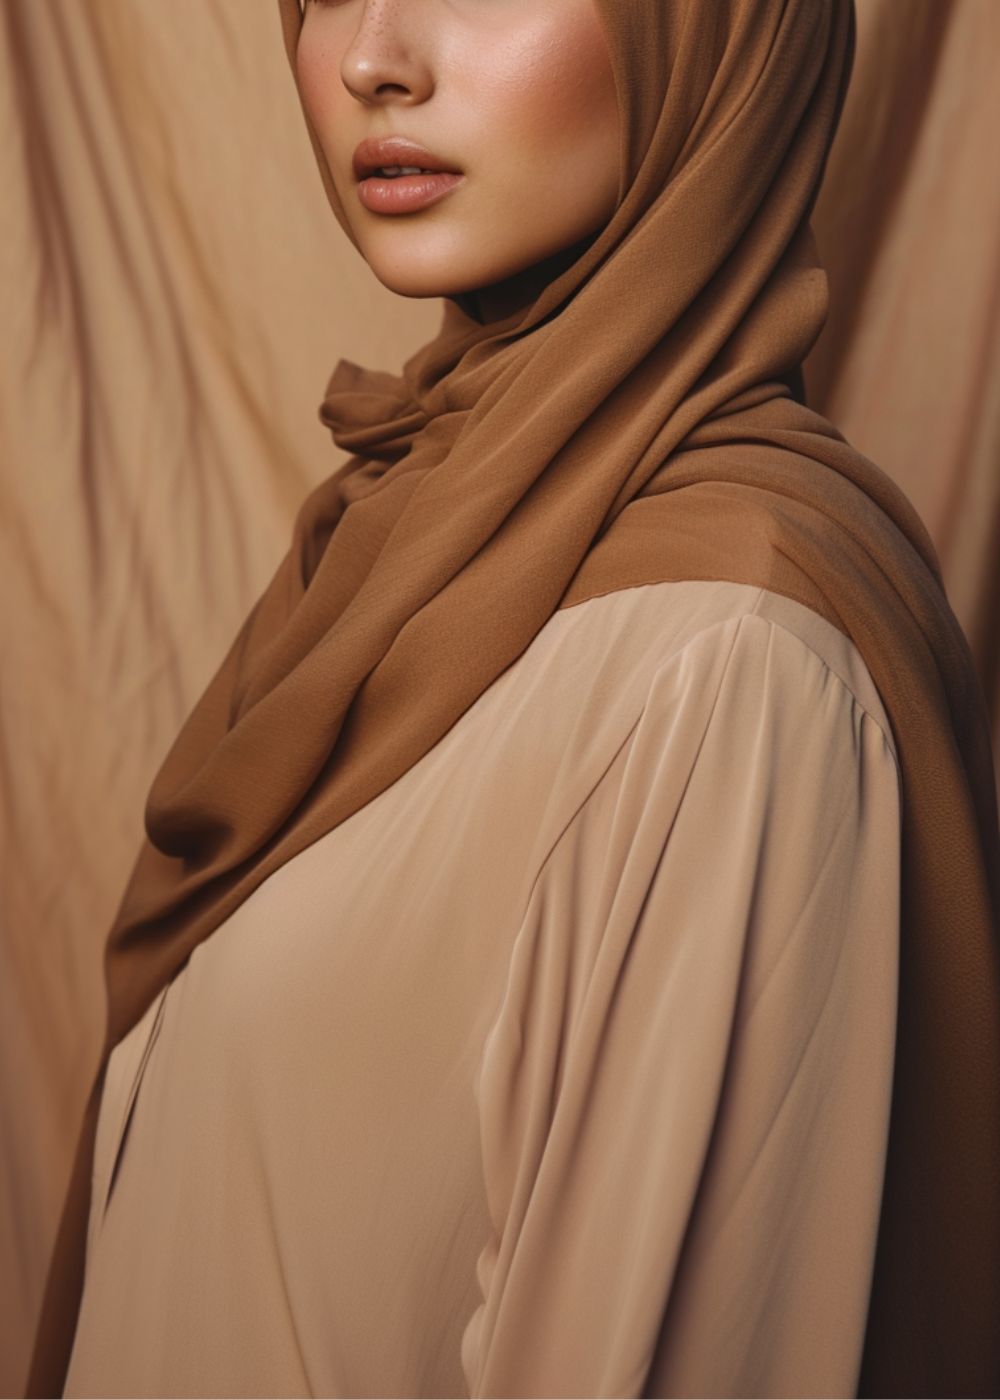 Muslim Women's Instant Hijab Scarf Premium Jersey Cotton